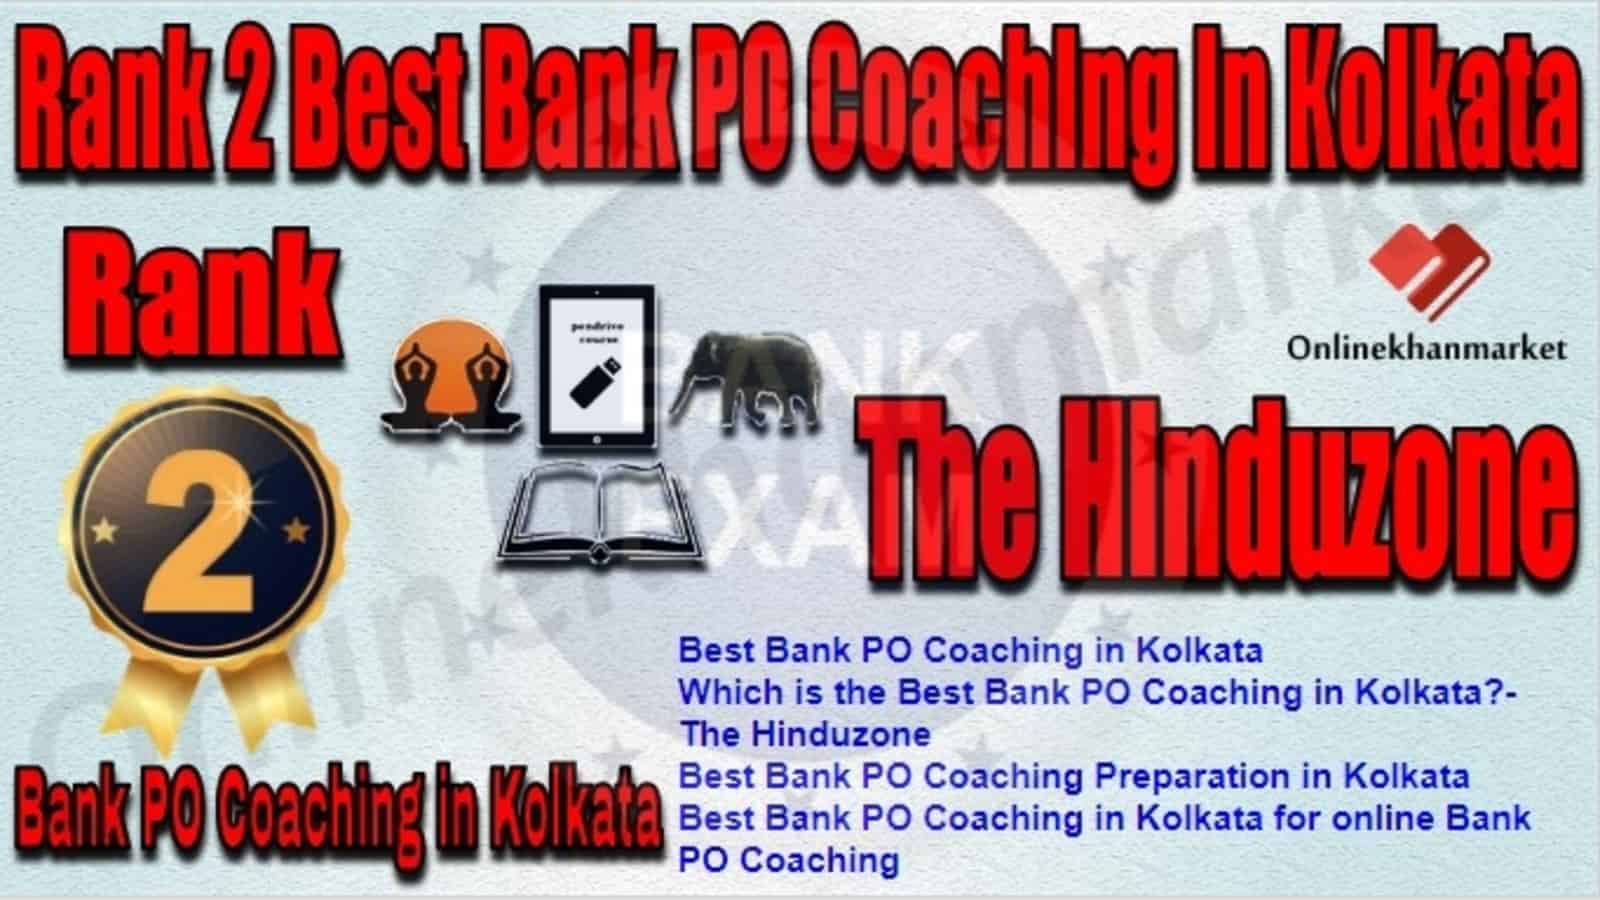 Rank 2 Best Bank PO Coaching in Kolkata